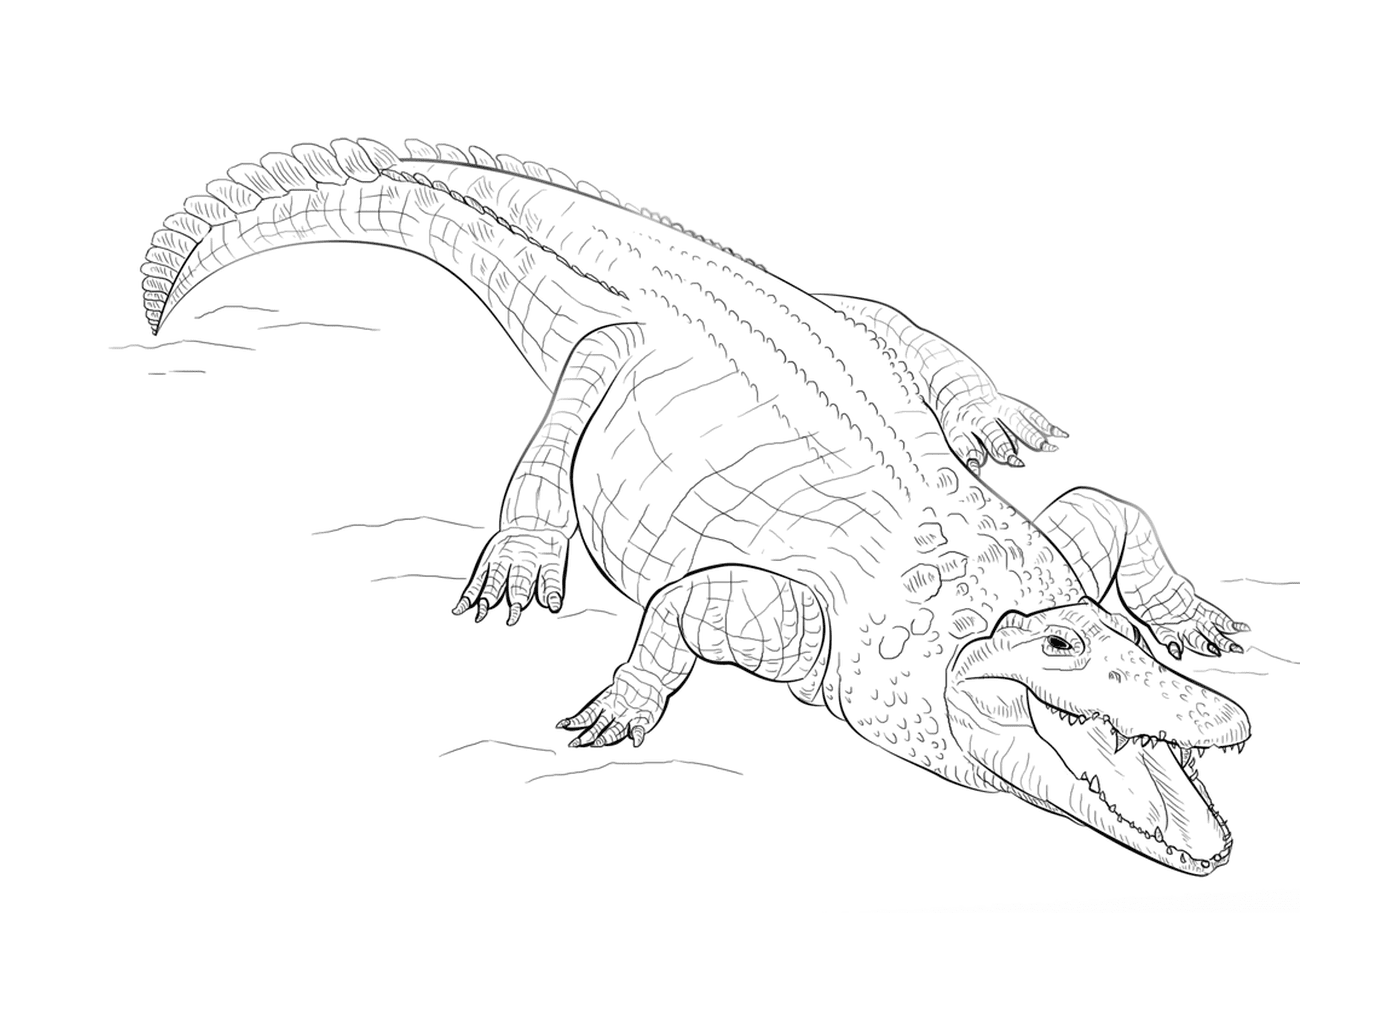  A ferocious Nile crocodile in a field 